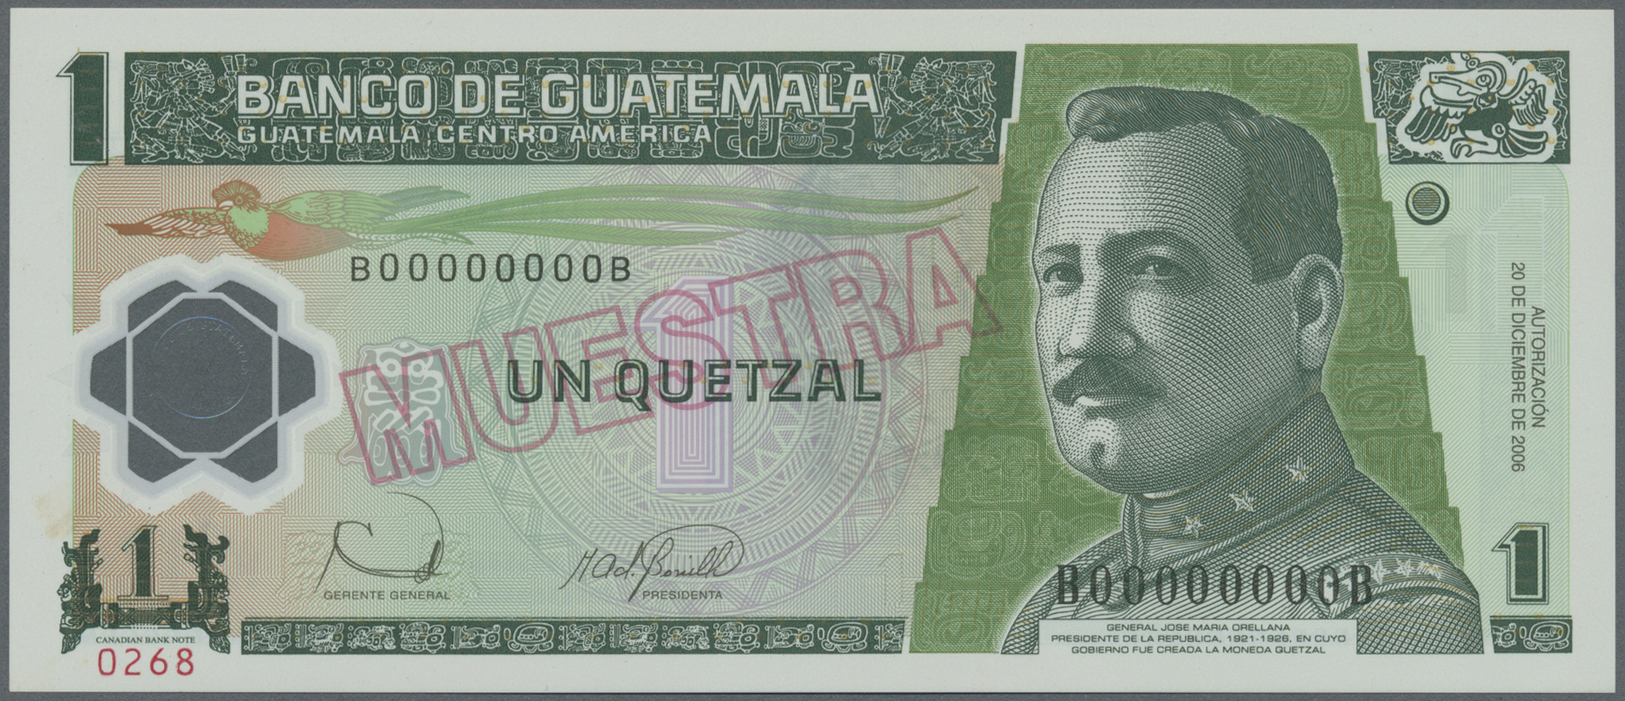 00969 Guatemala: 1 Quetzal 2006 Polymer Specimen P. 109s In Condition: UNC. - Guatemala